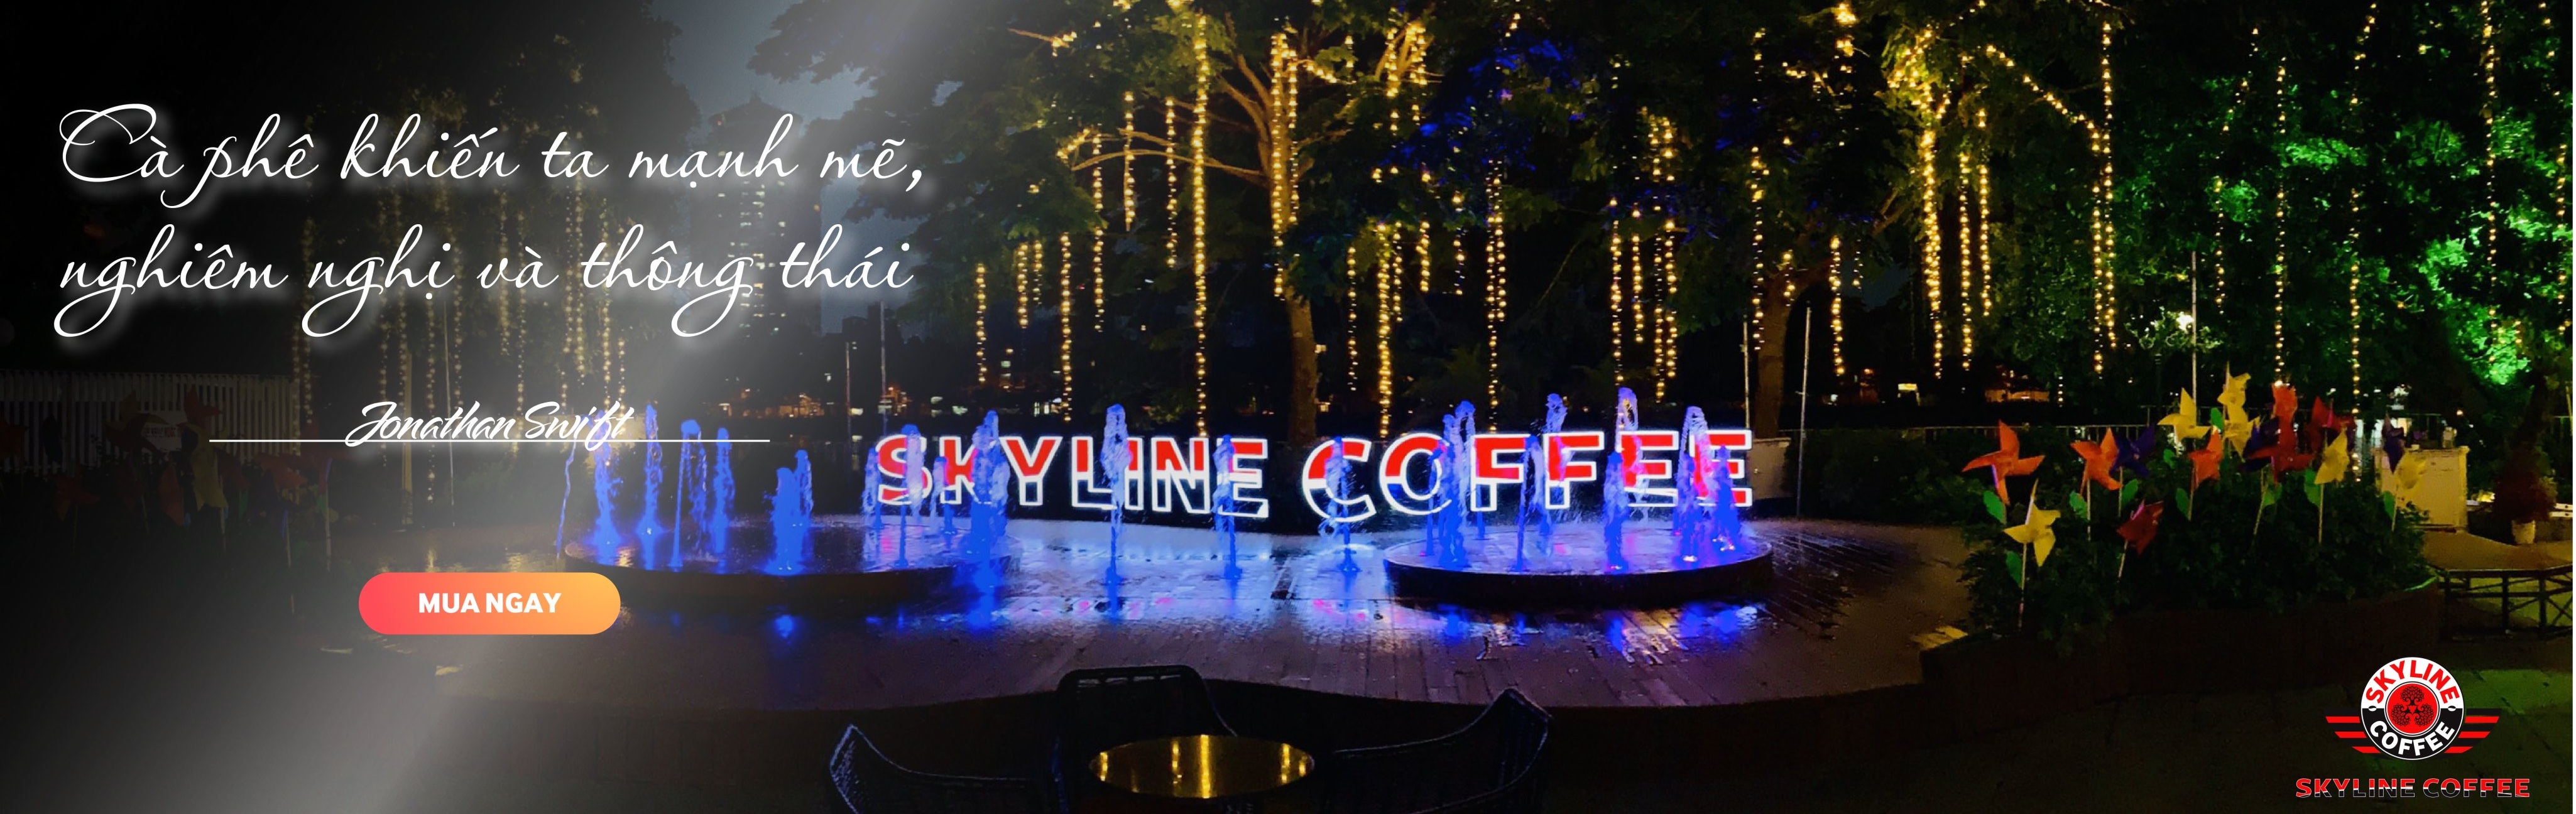 Về Skyline - Hoang Cau night